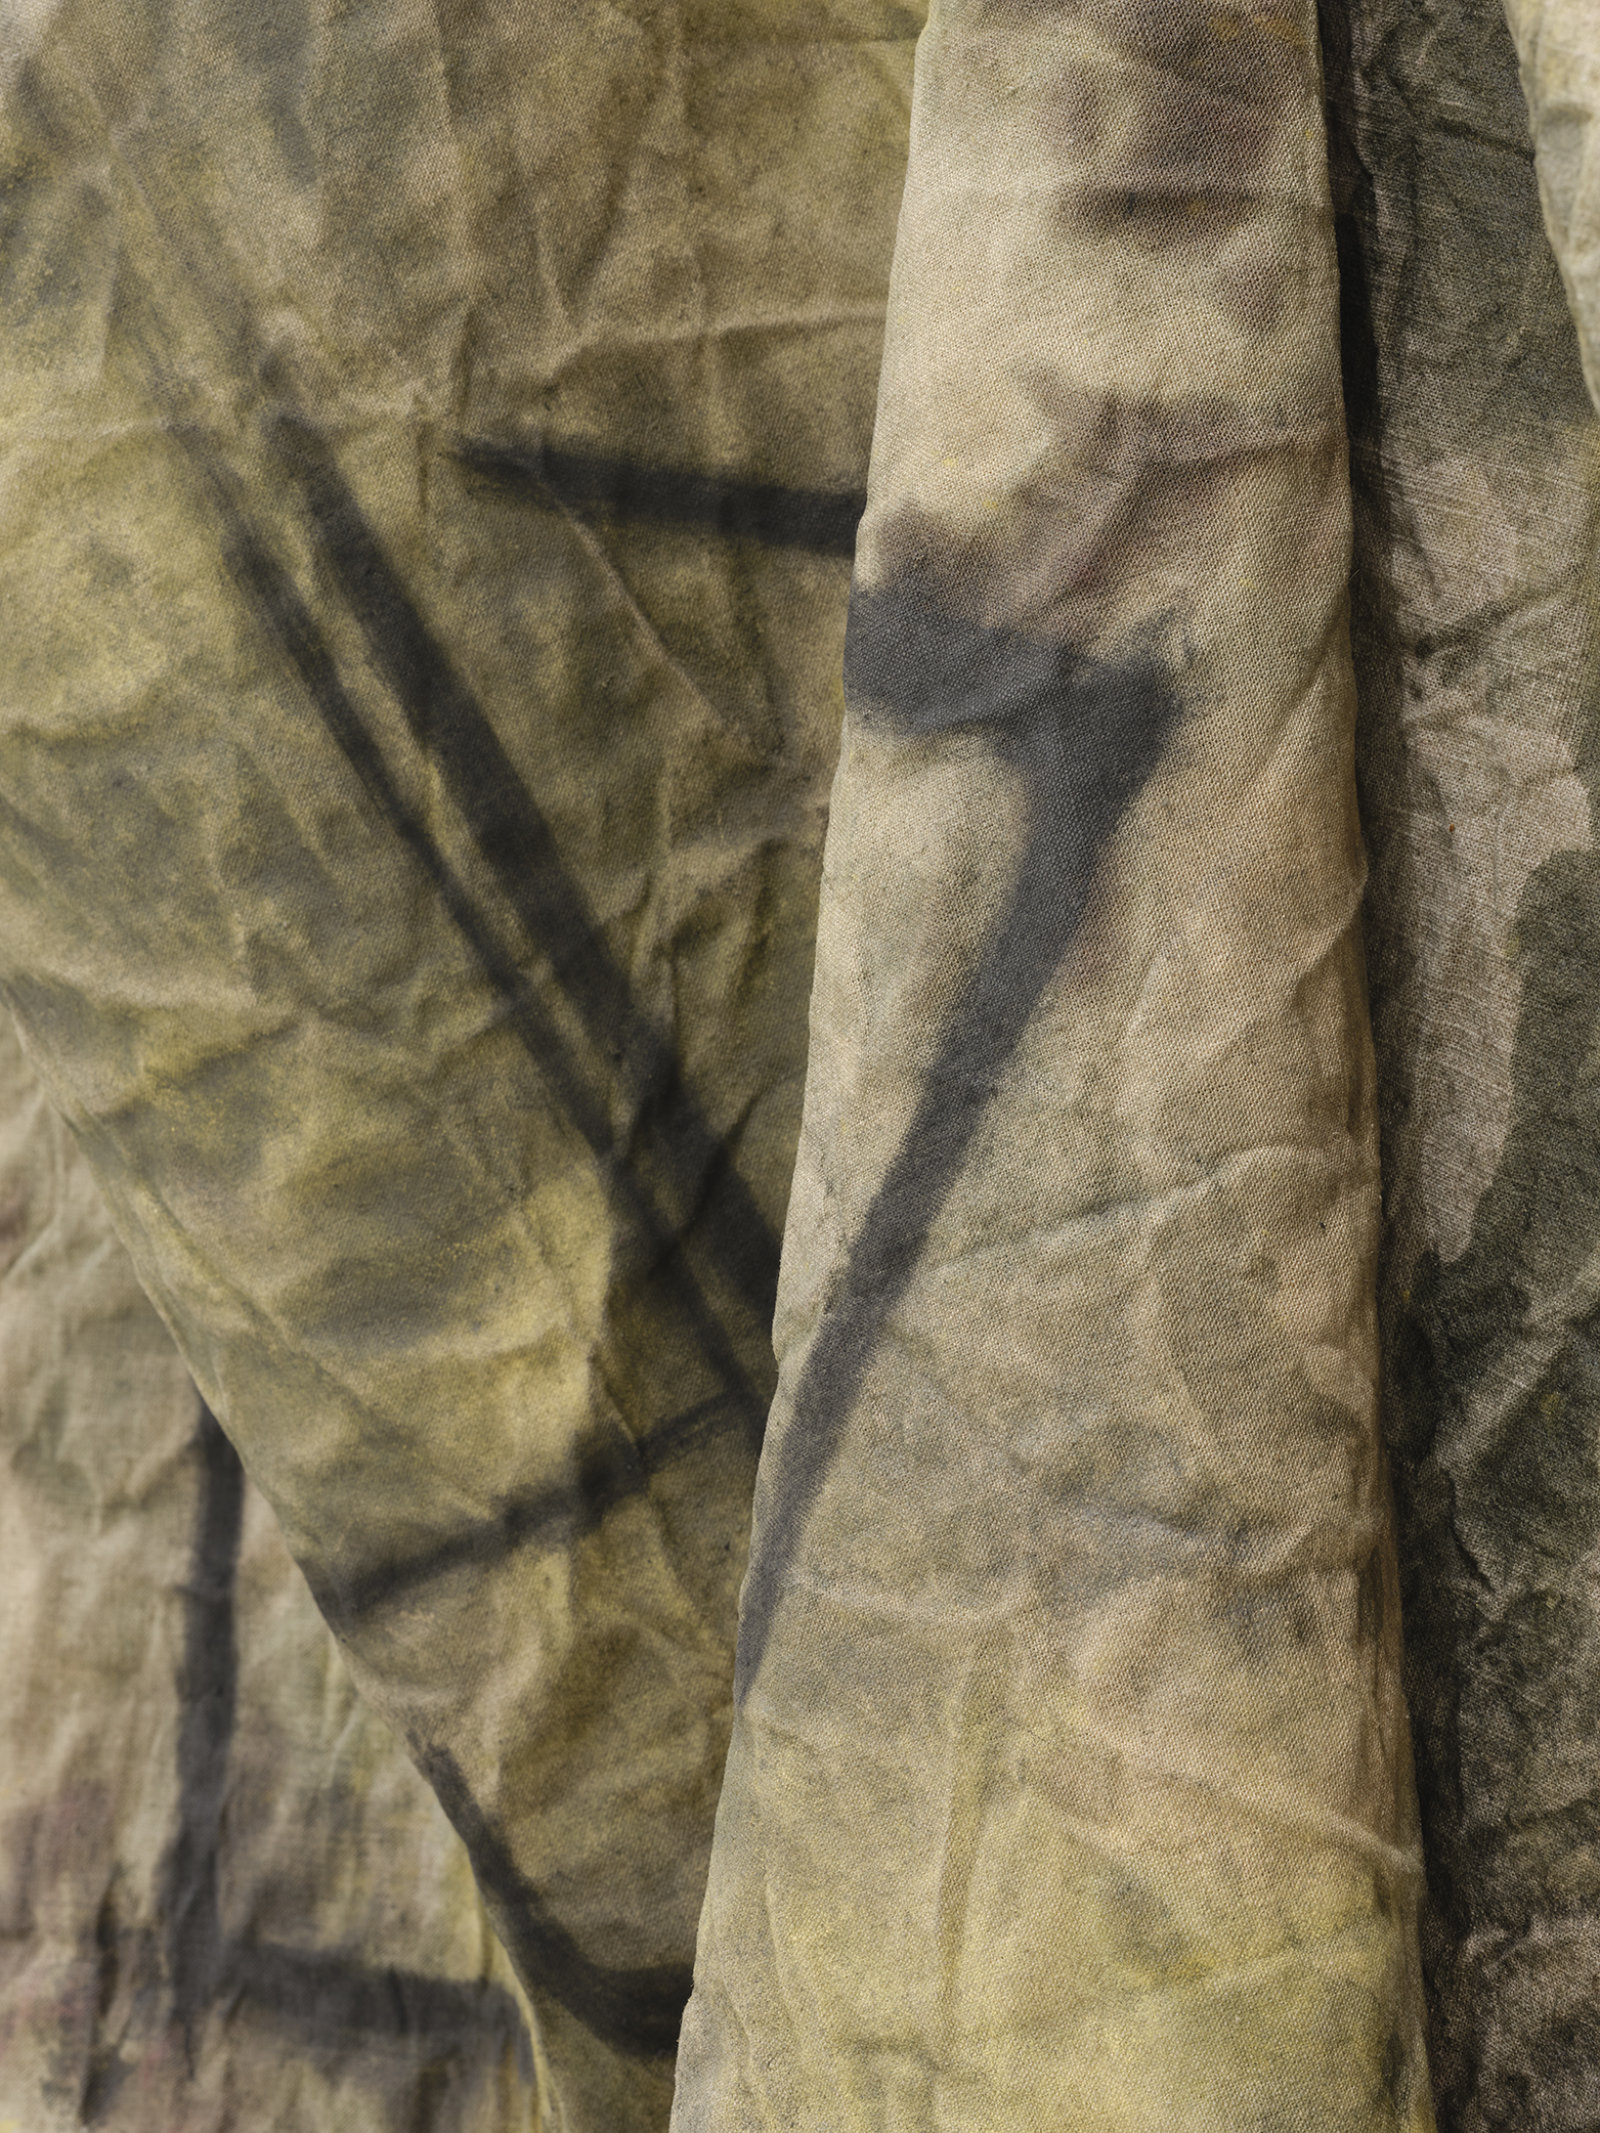 Duane Linklater, bugjuice (detail), 2021, digital print on linen, cochineal dye, yellow ochre, honey, charcoal, nails, 66 x 45 x 9 in. (168 x 114 x 22 cm)